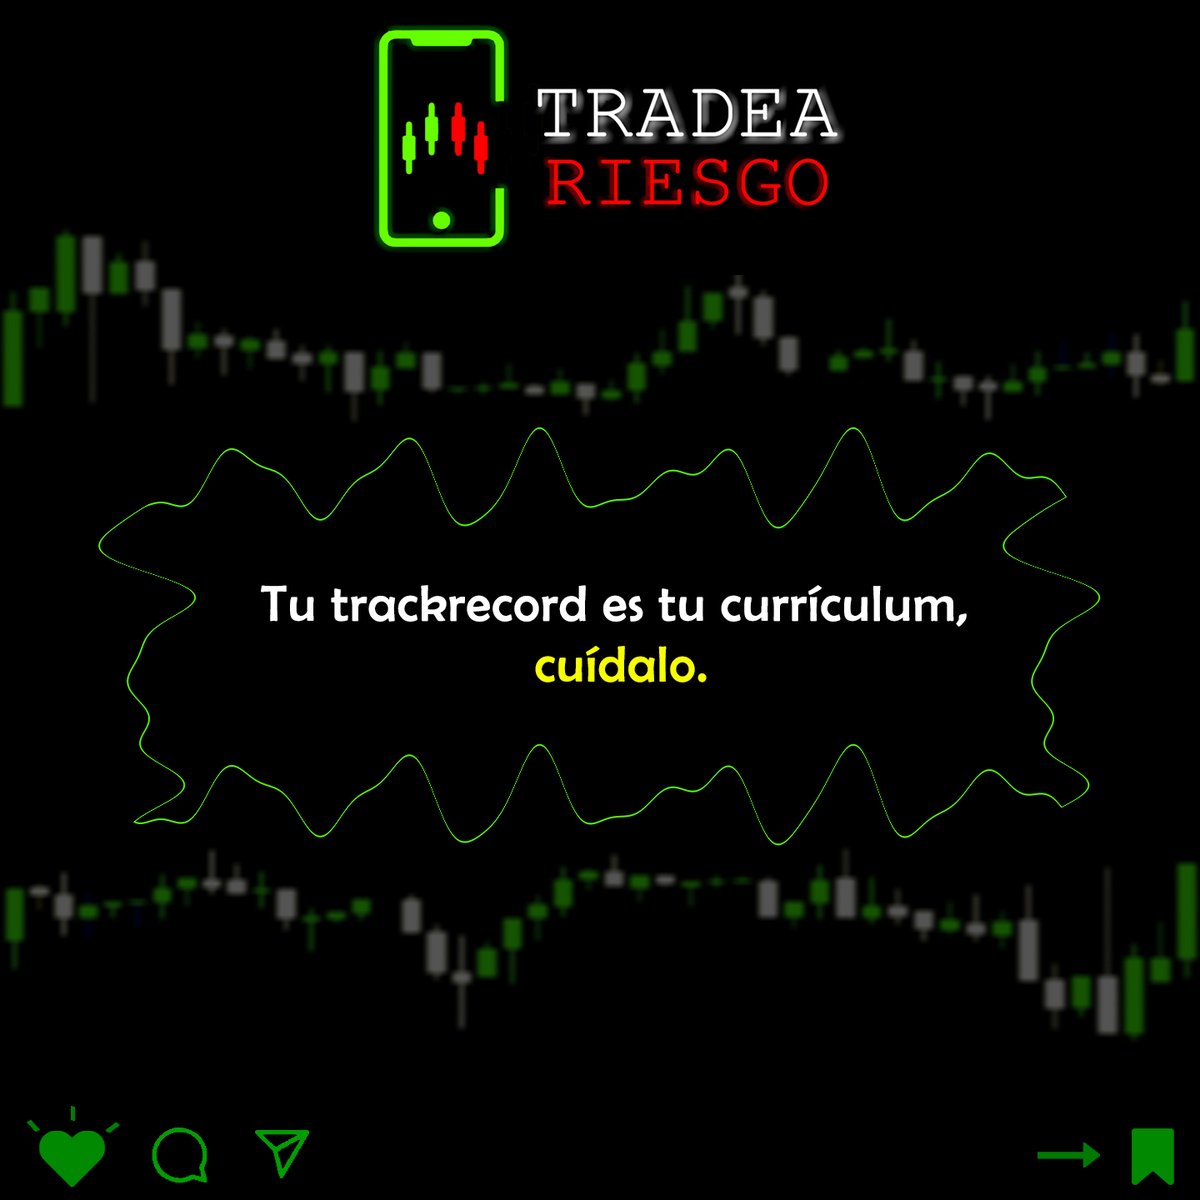 Tu trackrecord es tu currículum, cuídalo.

#trading #consejo #frase #trader #forex #trackrecord